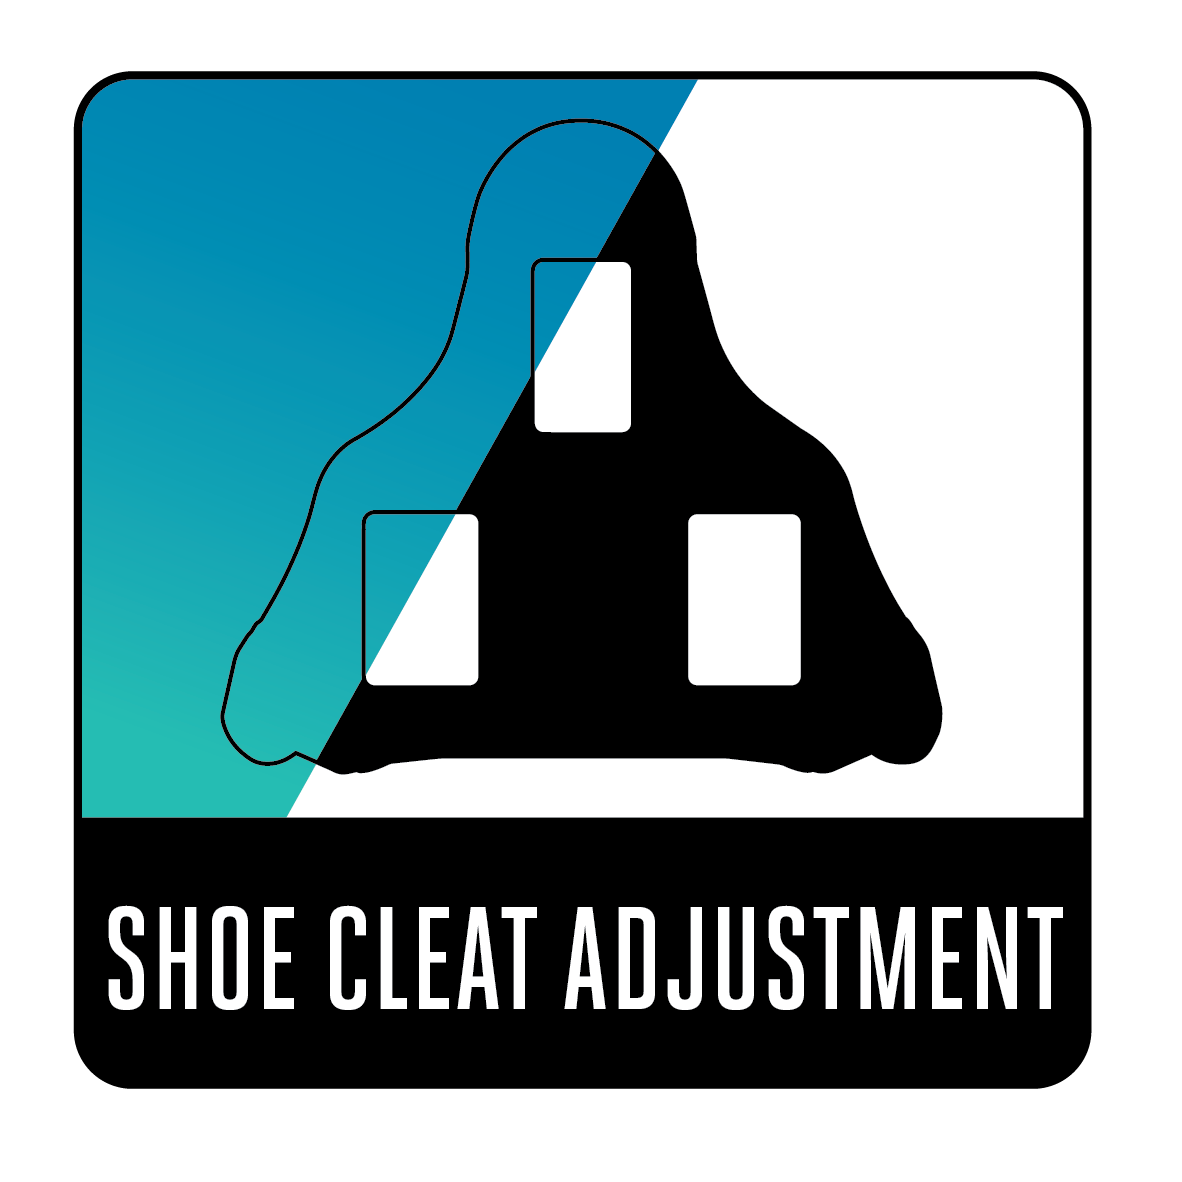 Shoe cleat adjustment